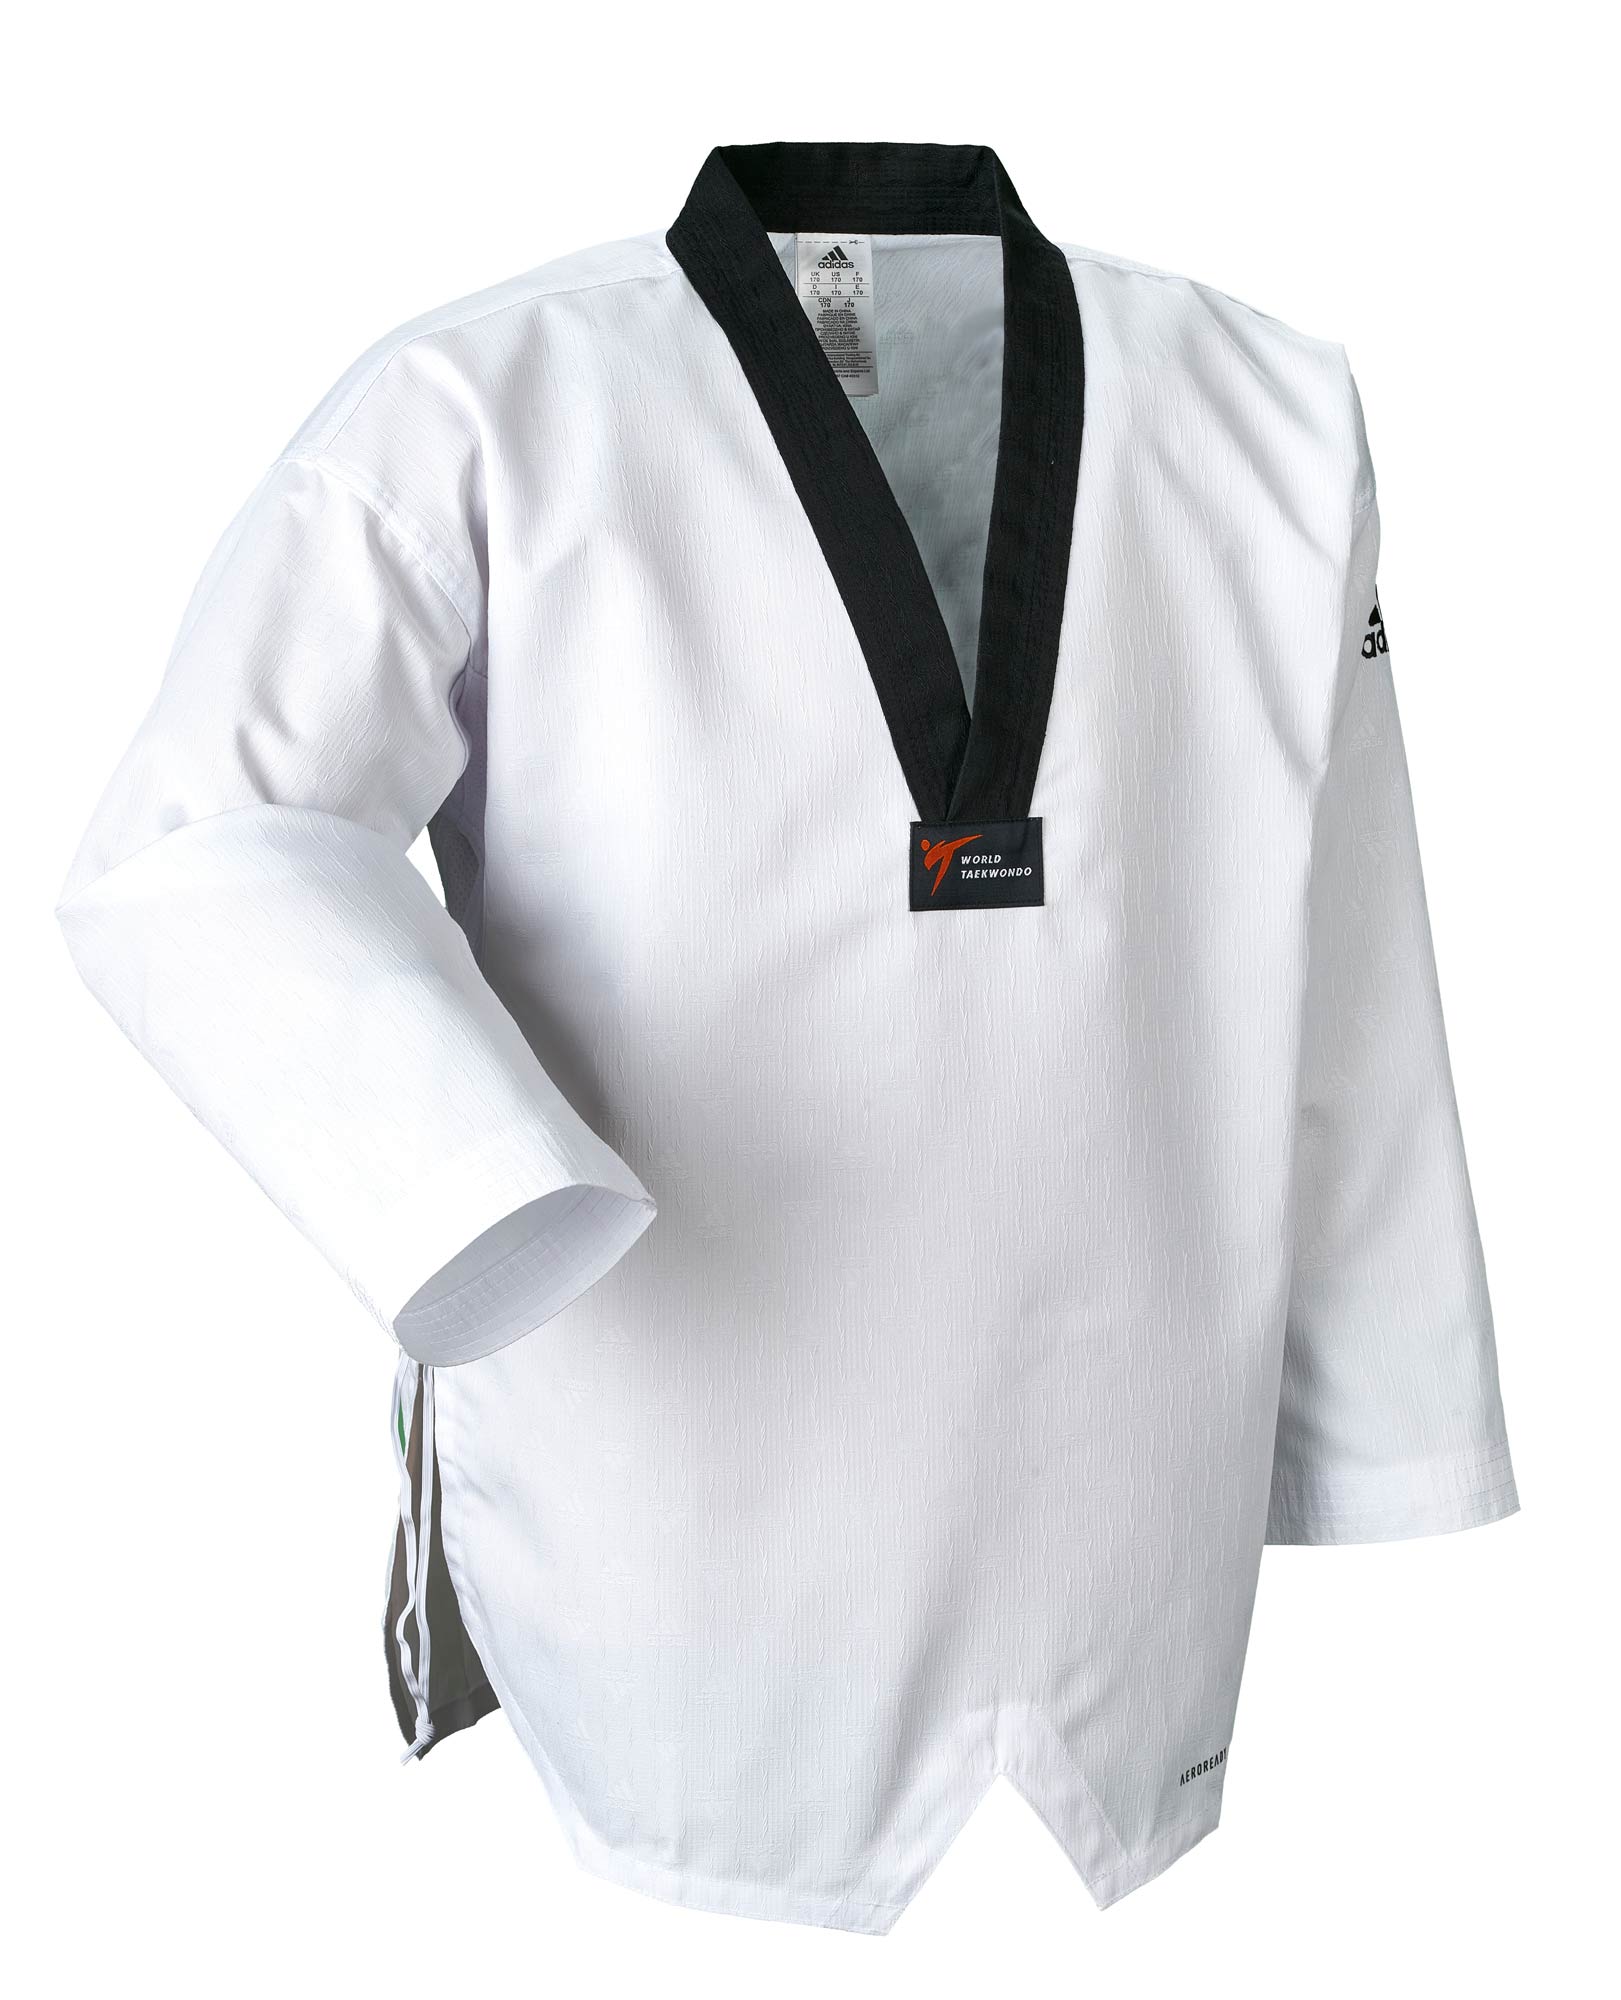 adidas Taekwondo-Anzug adiChamp IV, schwarzes Revers, ADITCH04